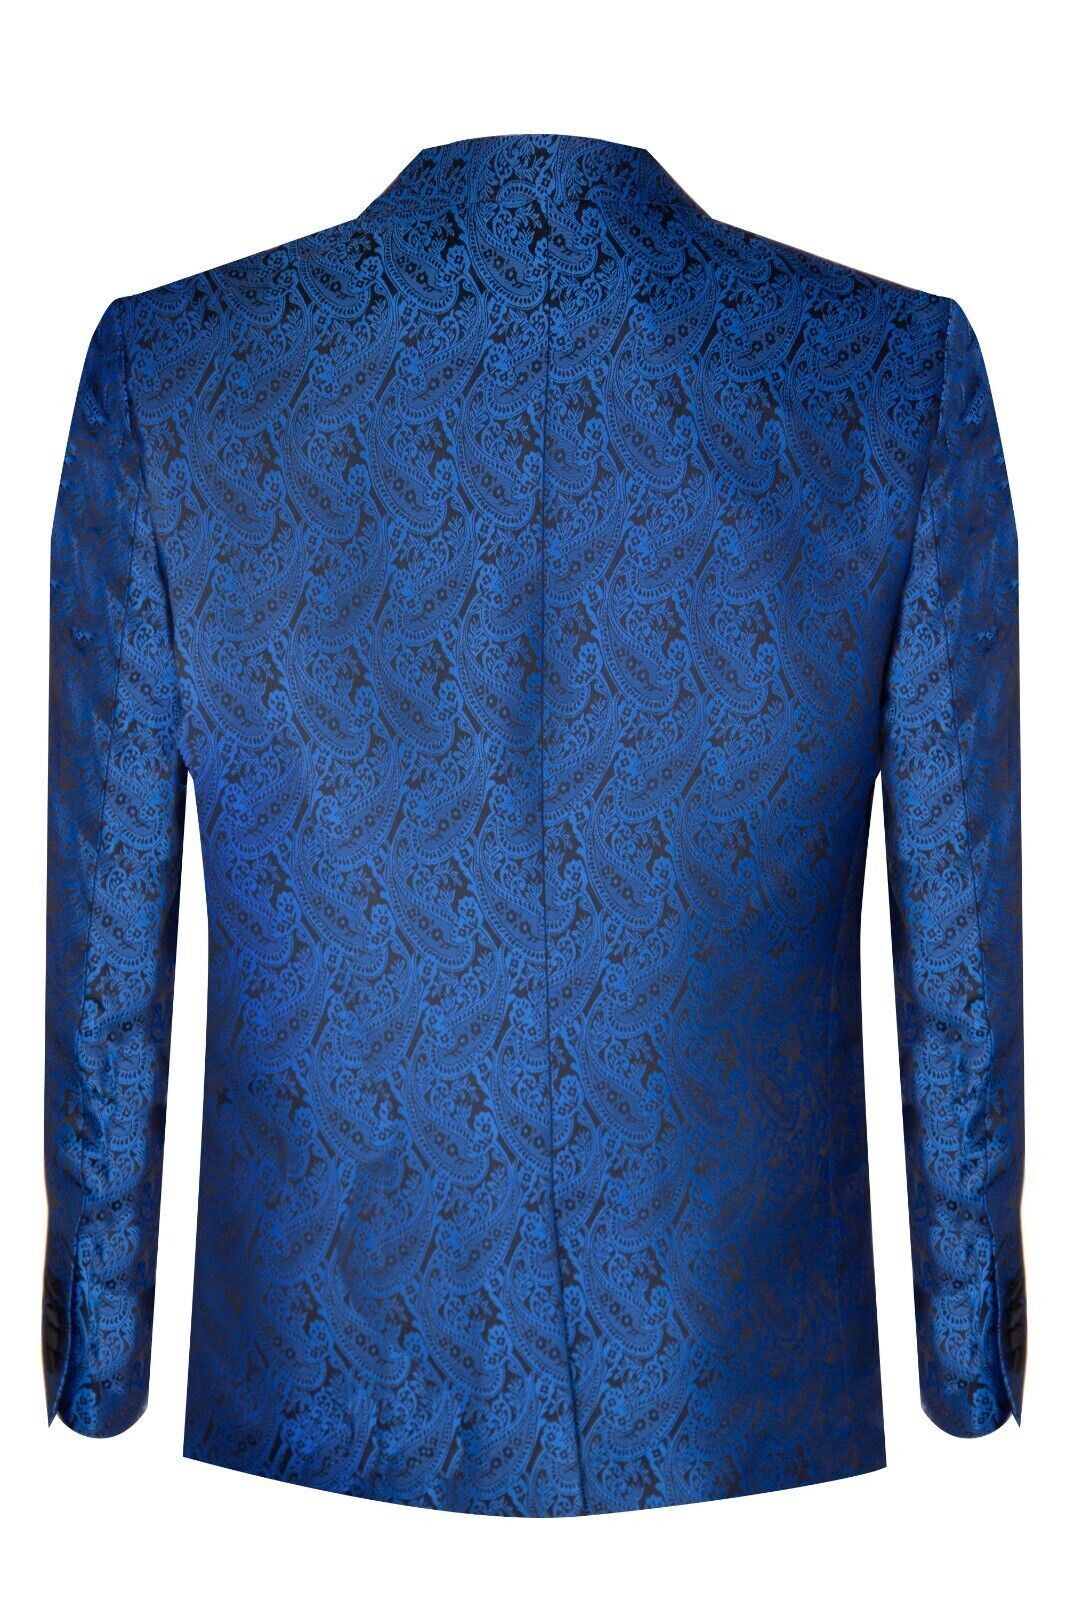 Mens Blue Tuxedo Blazer Waistcoat Brocade Black Satin Paisley Dinner Jacket - Upperclass Fashions 